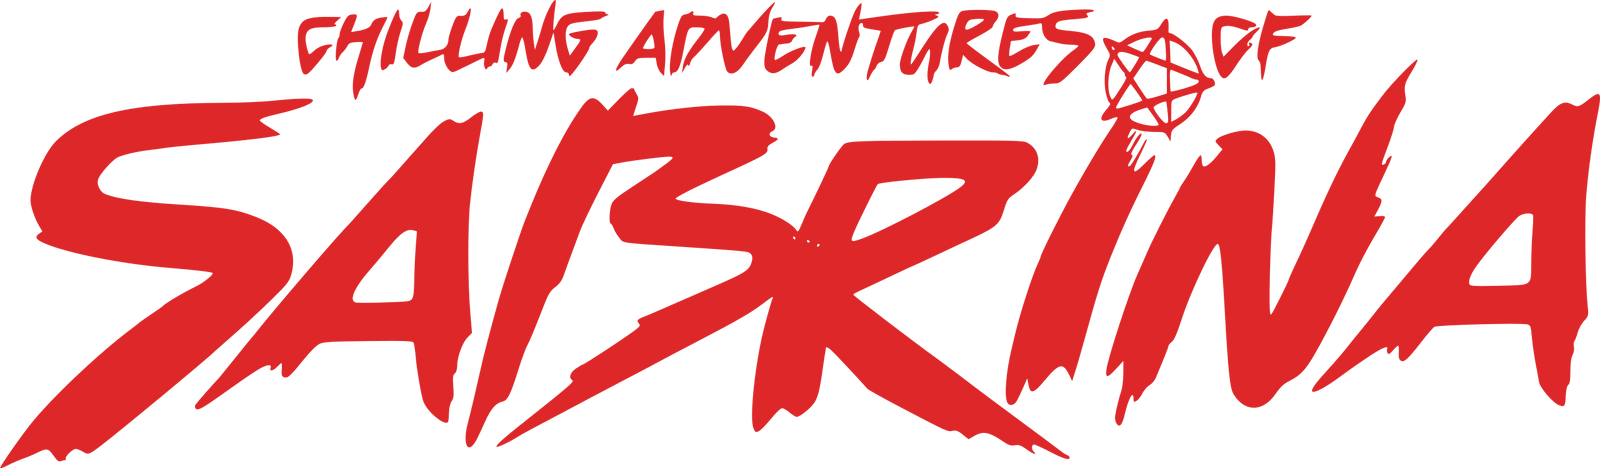 Chilling Adventures of Sabrina logo.